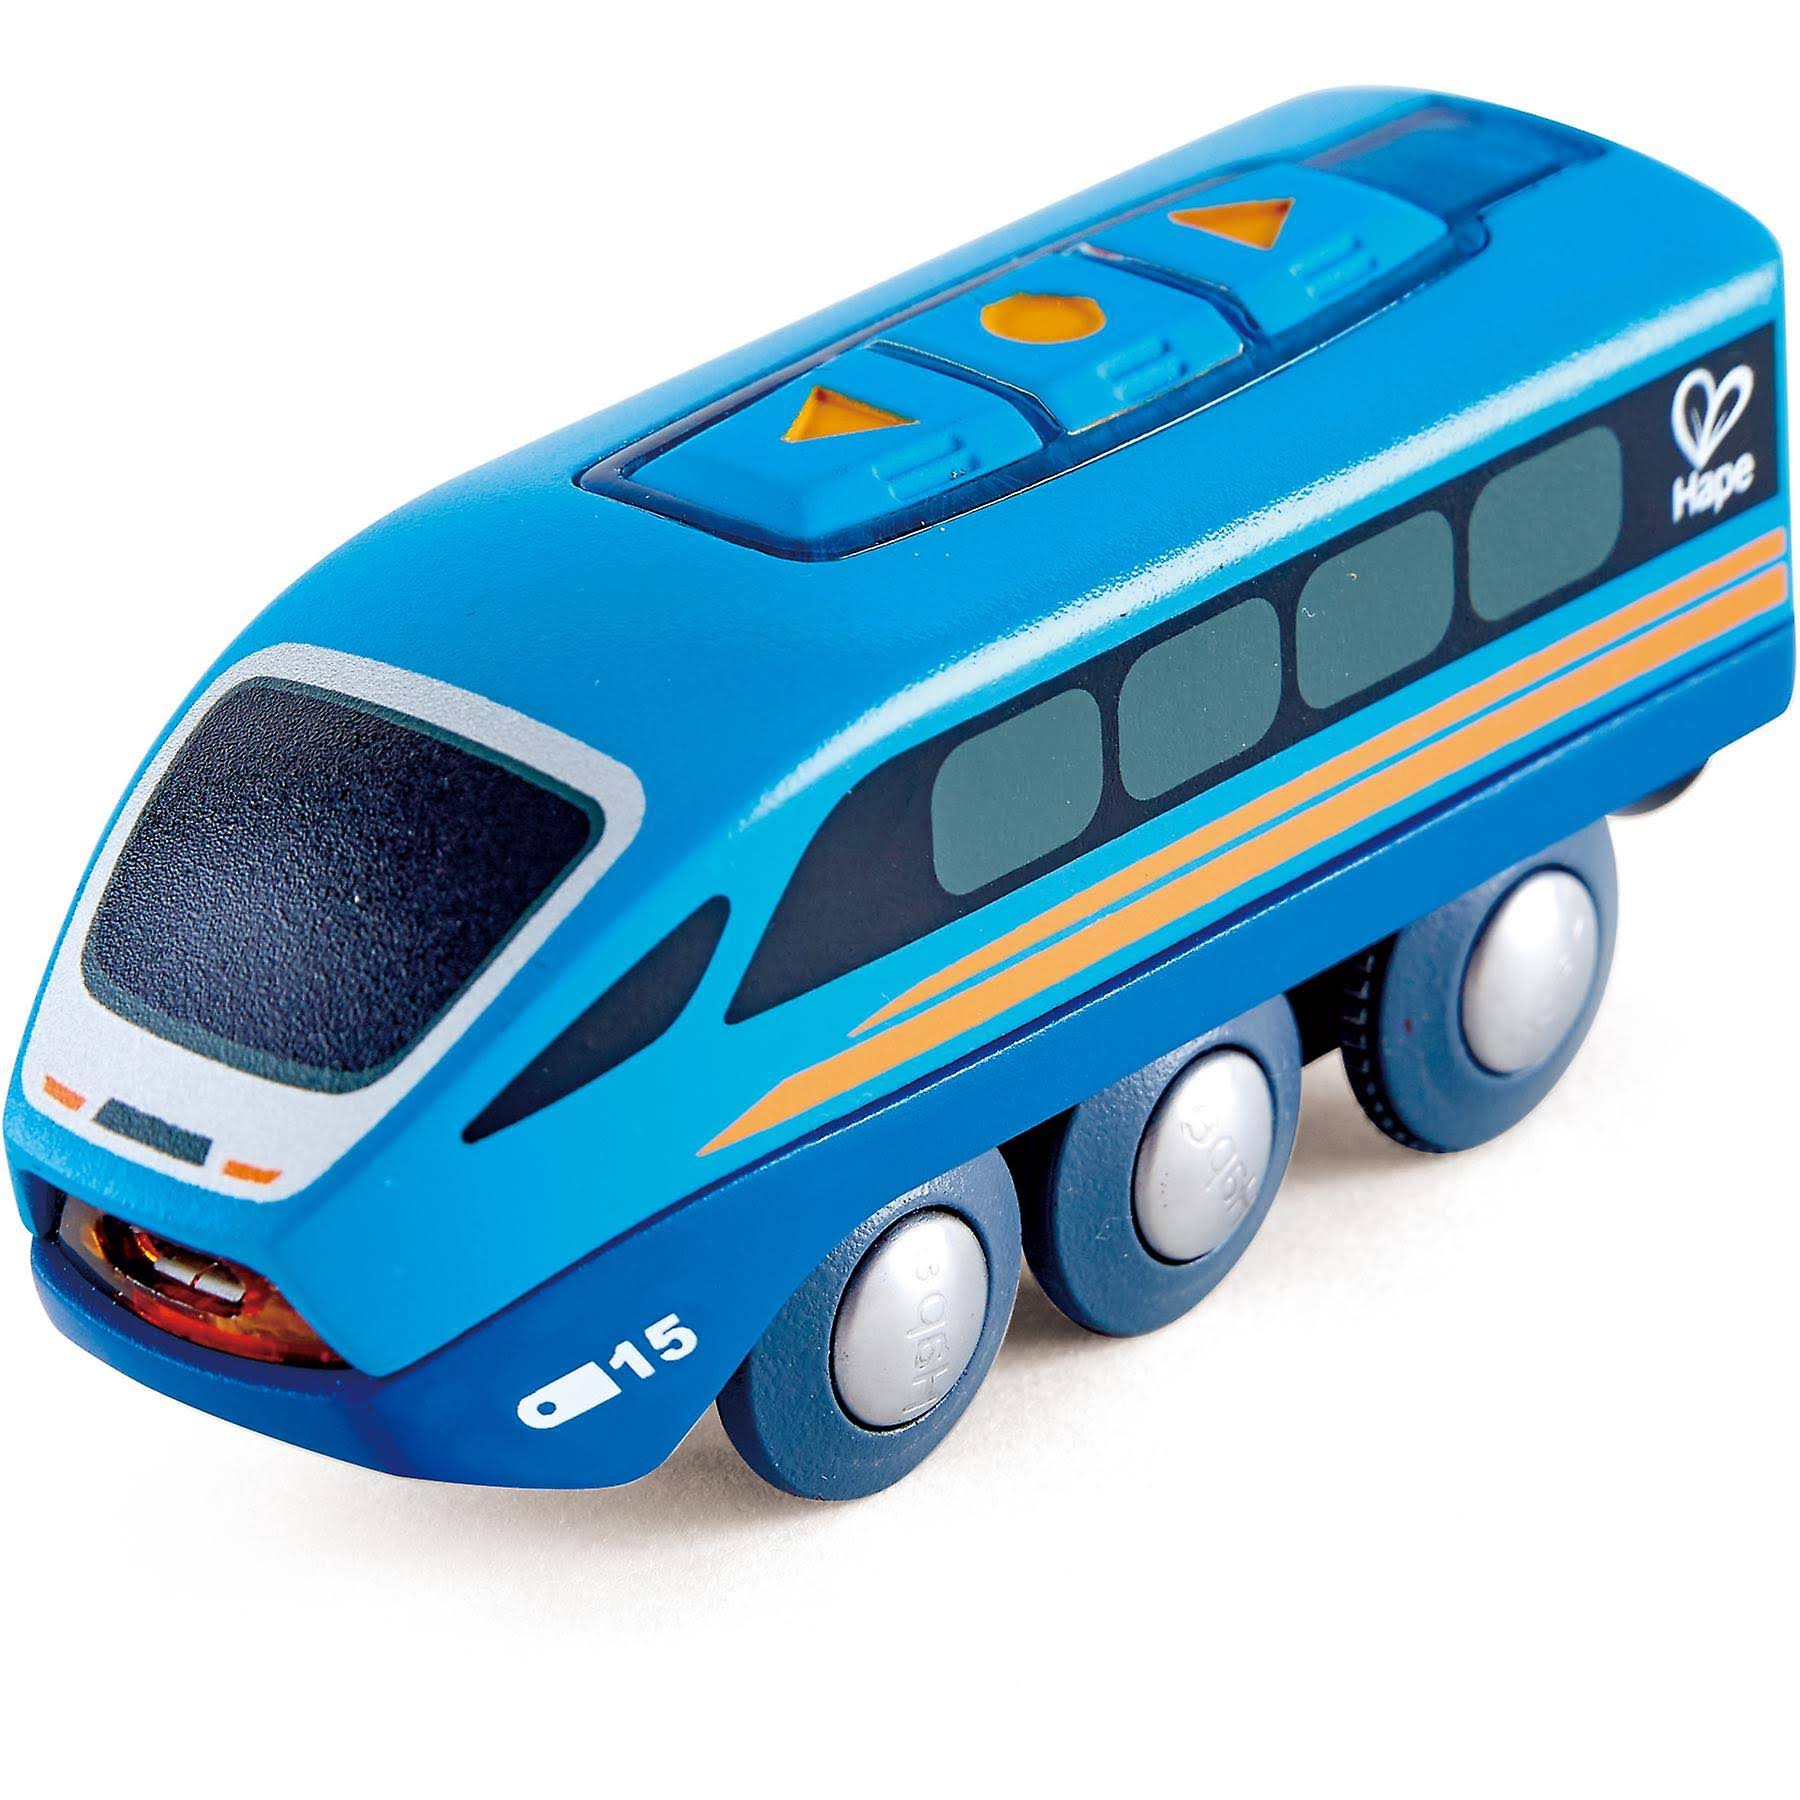 Hape E3726 Remote Controlled Train Wooden Children's Toy